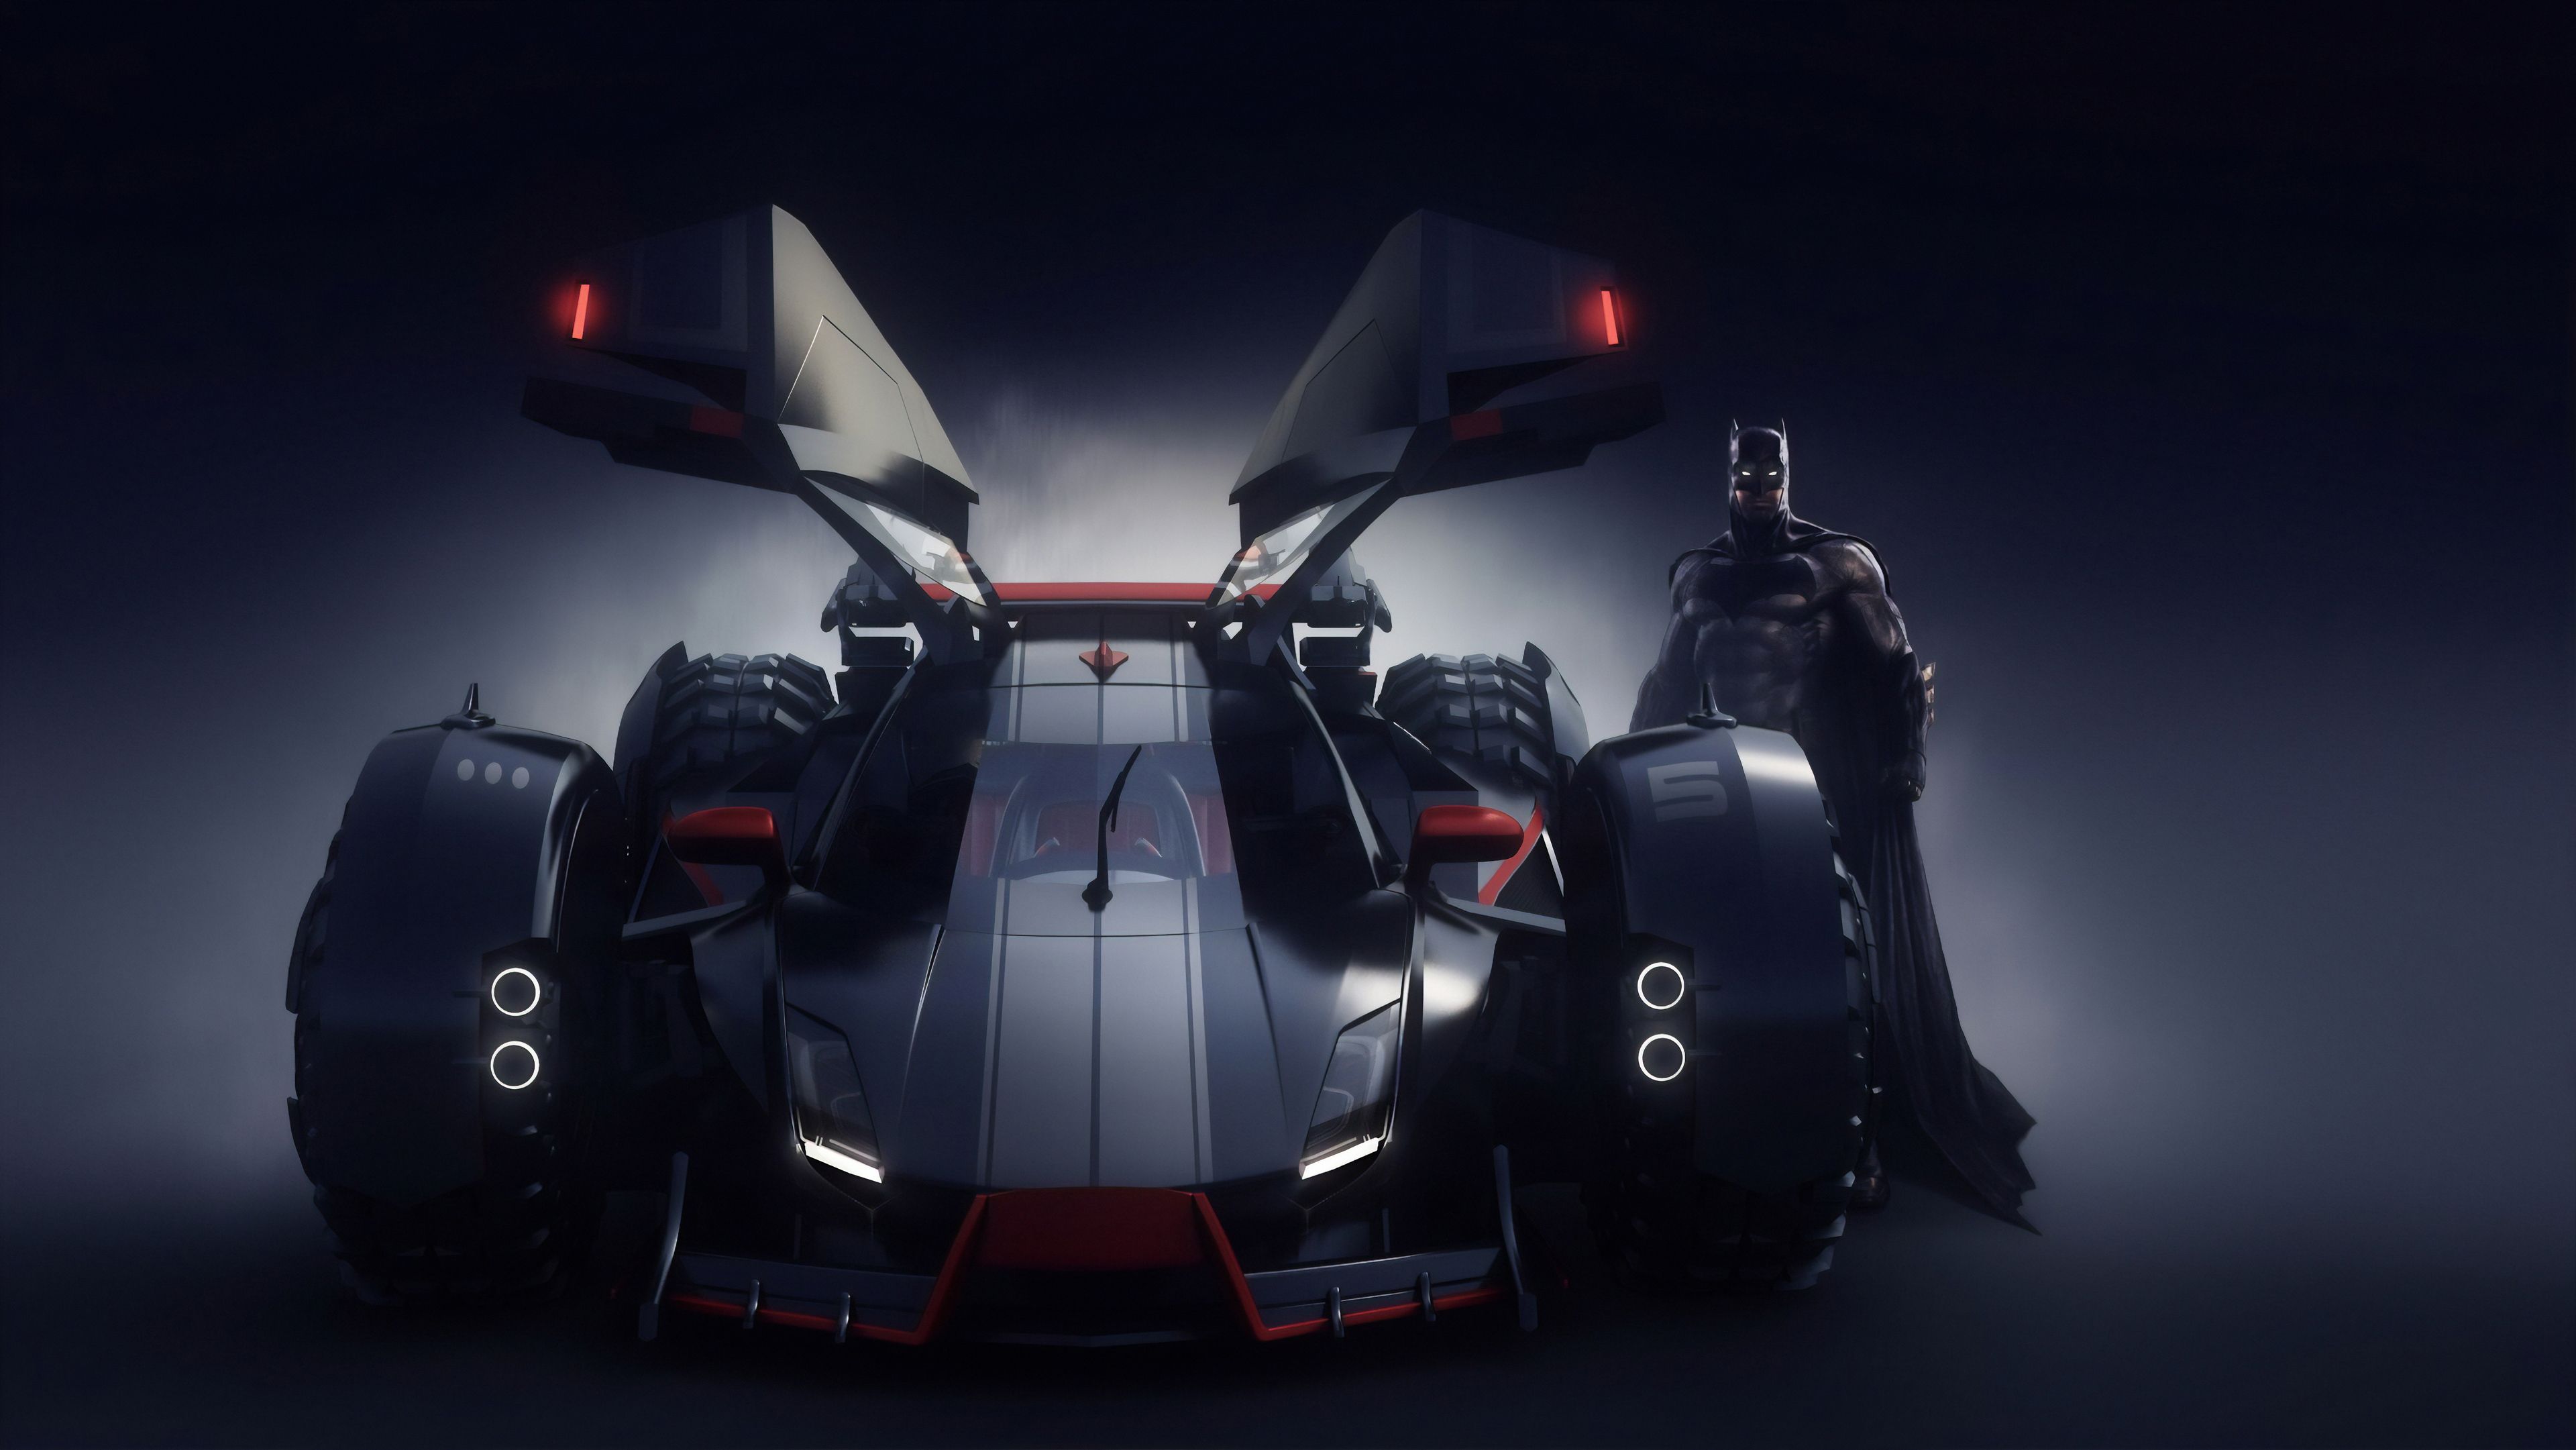 Batman Batmobile 4k, HD Superheroes, 4k Wallpaper, Image, Background, Photo and Picture